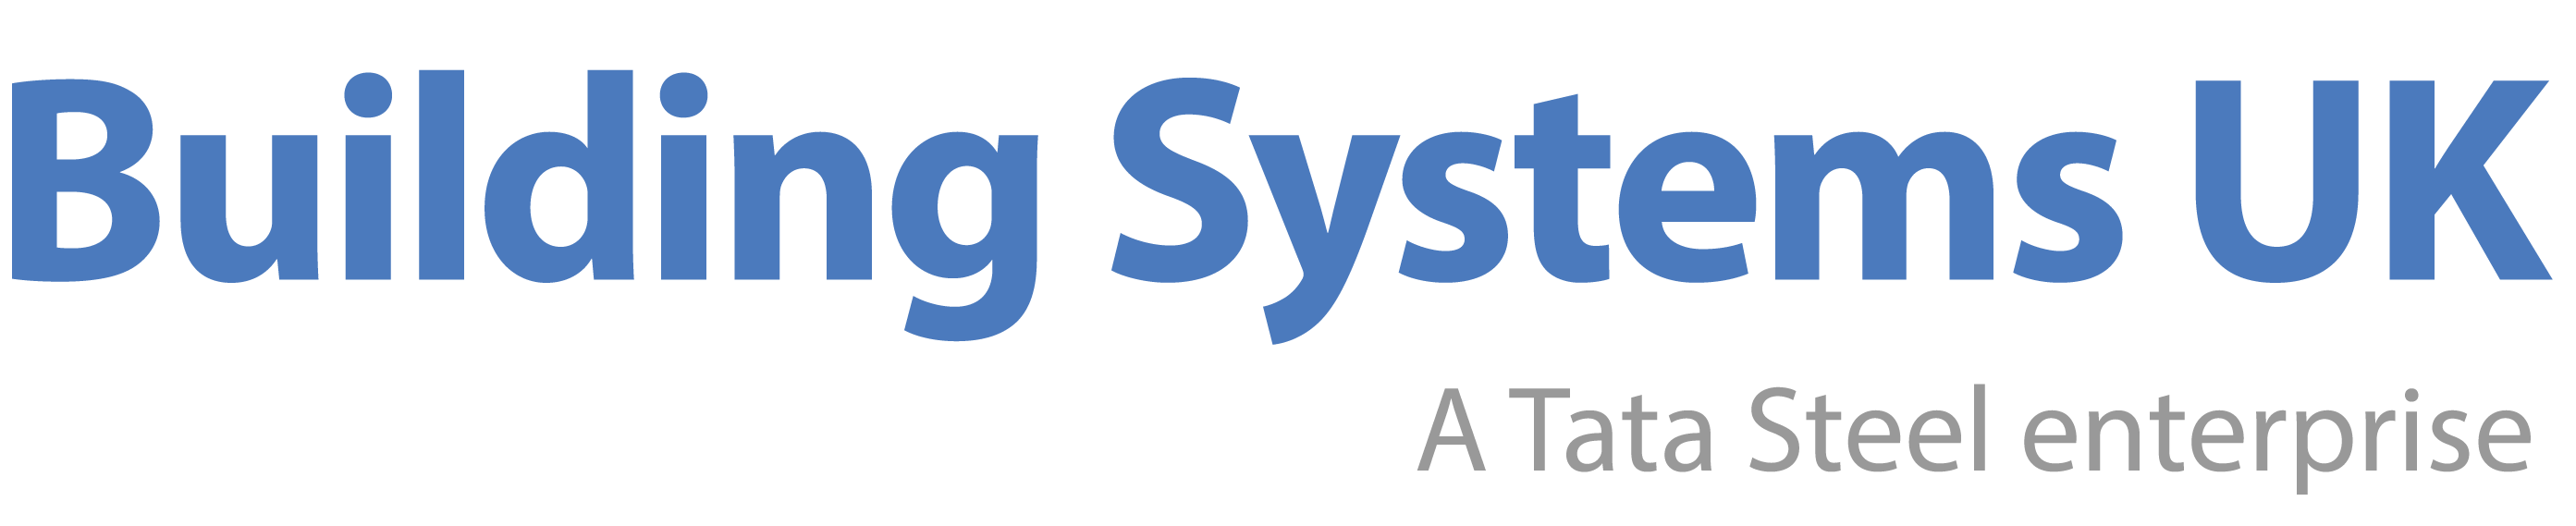 Building Systems UK - A Tata Steel Enterprise